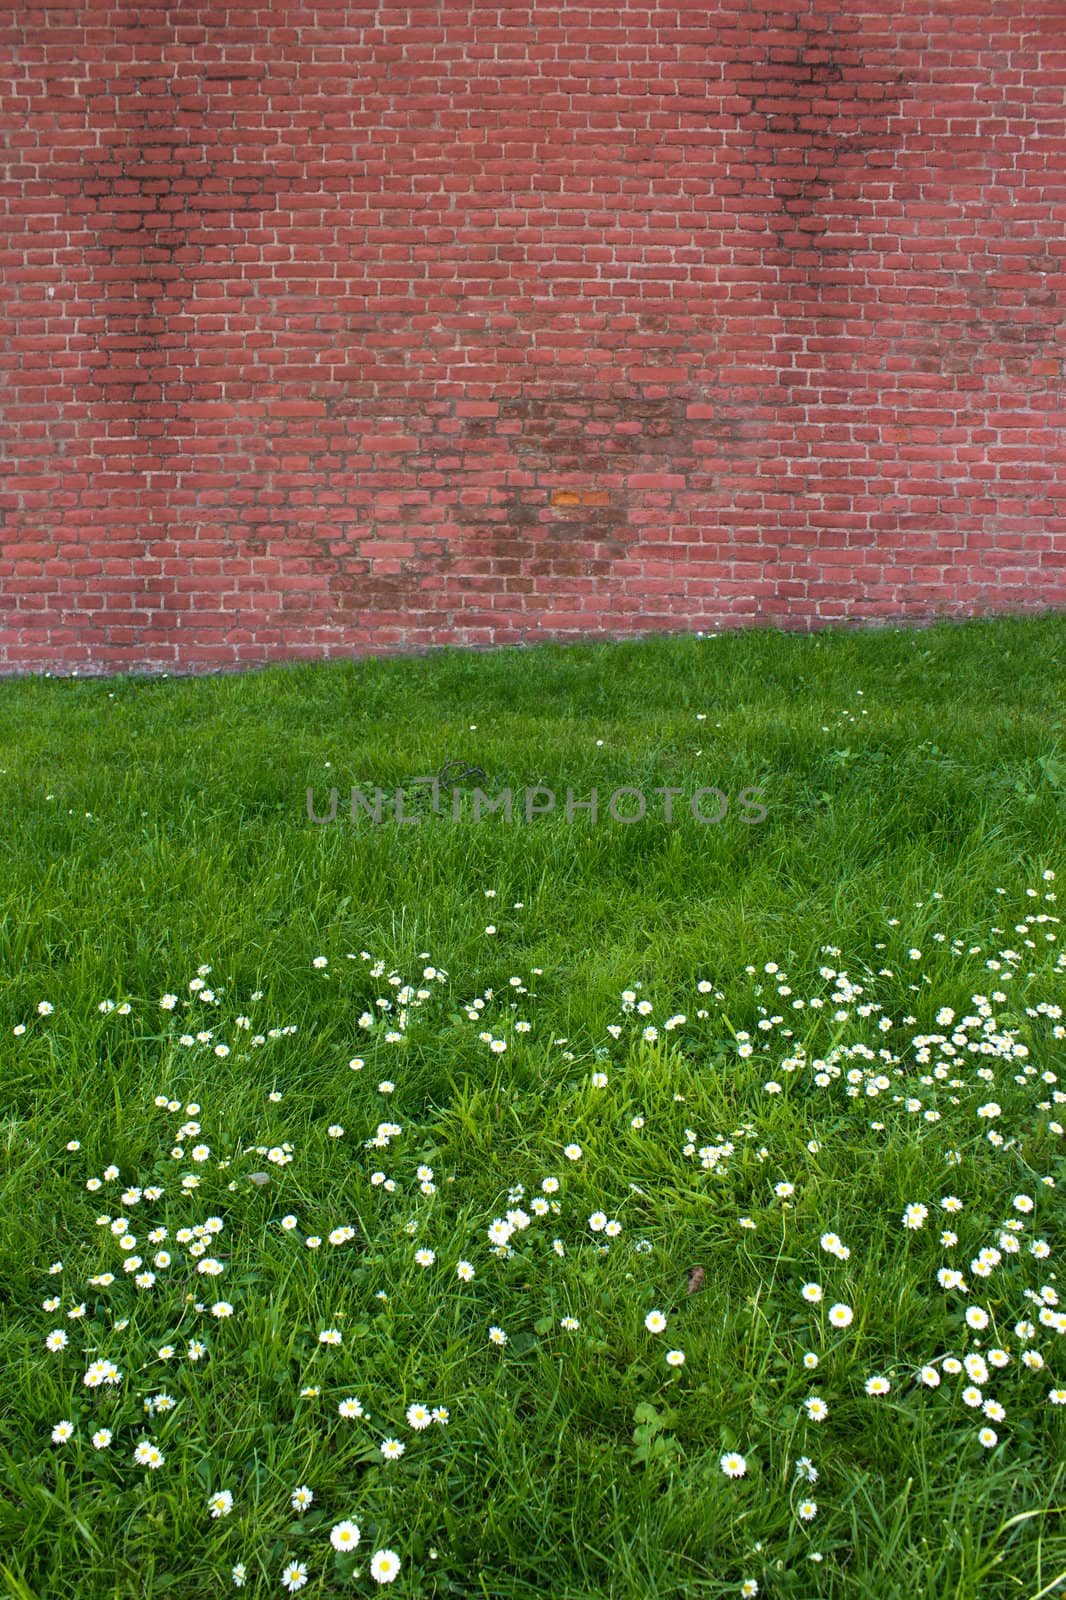 Brick wall on flower field by catalinr